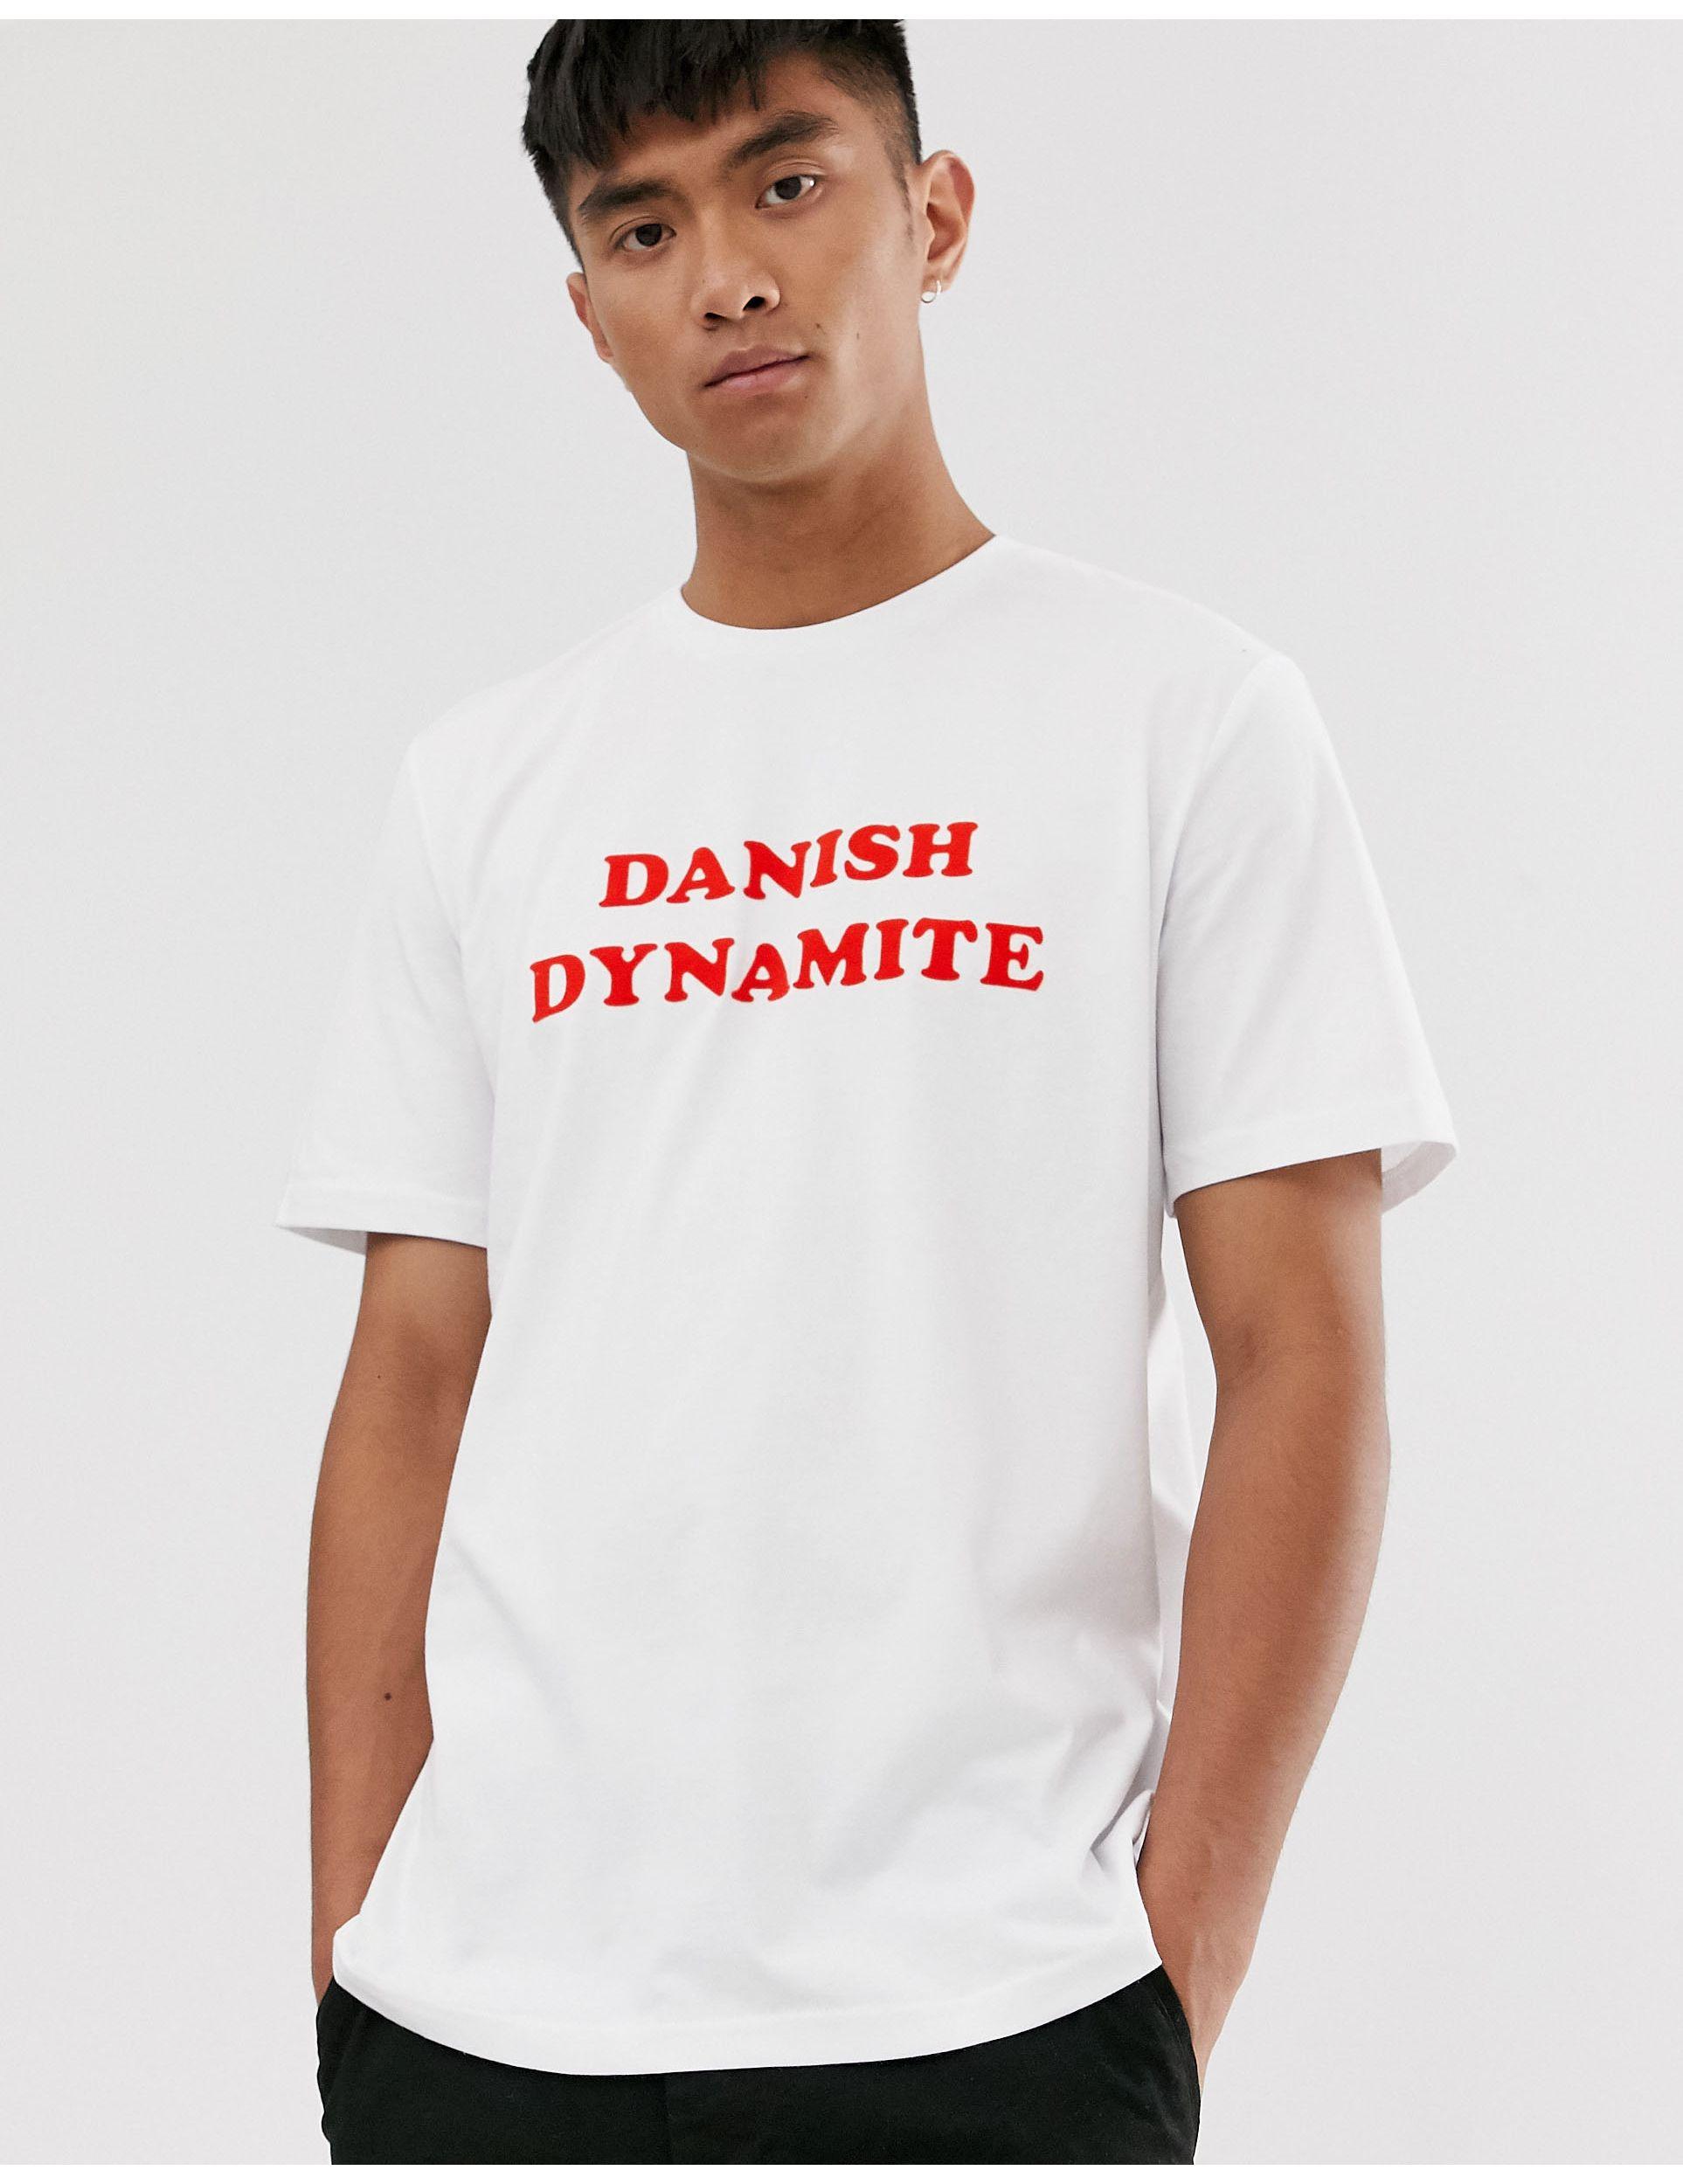 Forventning gammelklog Tilfredsstille Hummel Cotton Danish Dynamite T-shirt in White for Men - Save 60% - Lyst